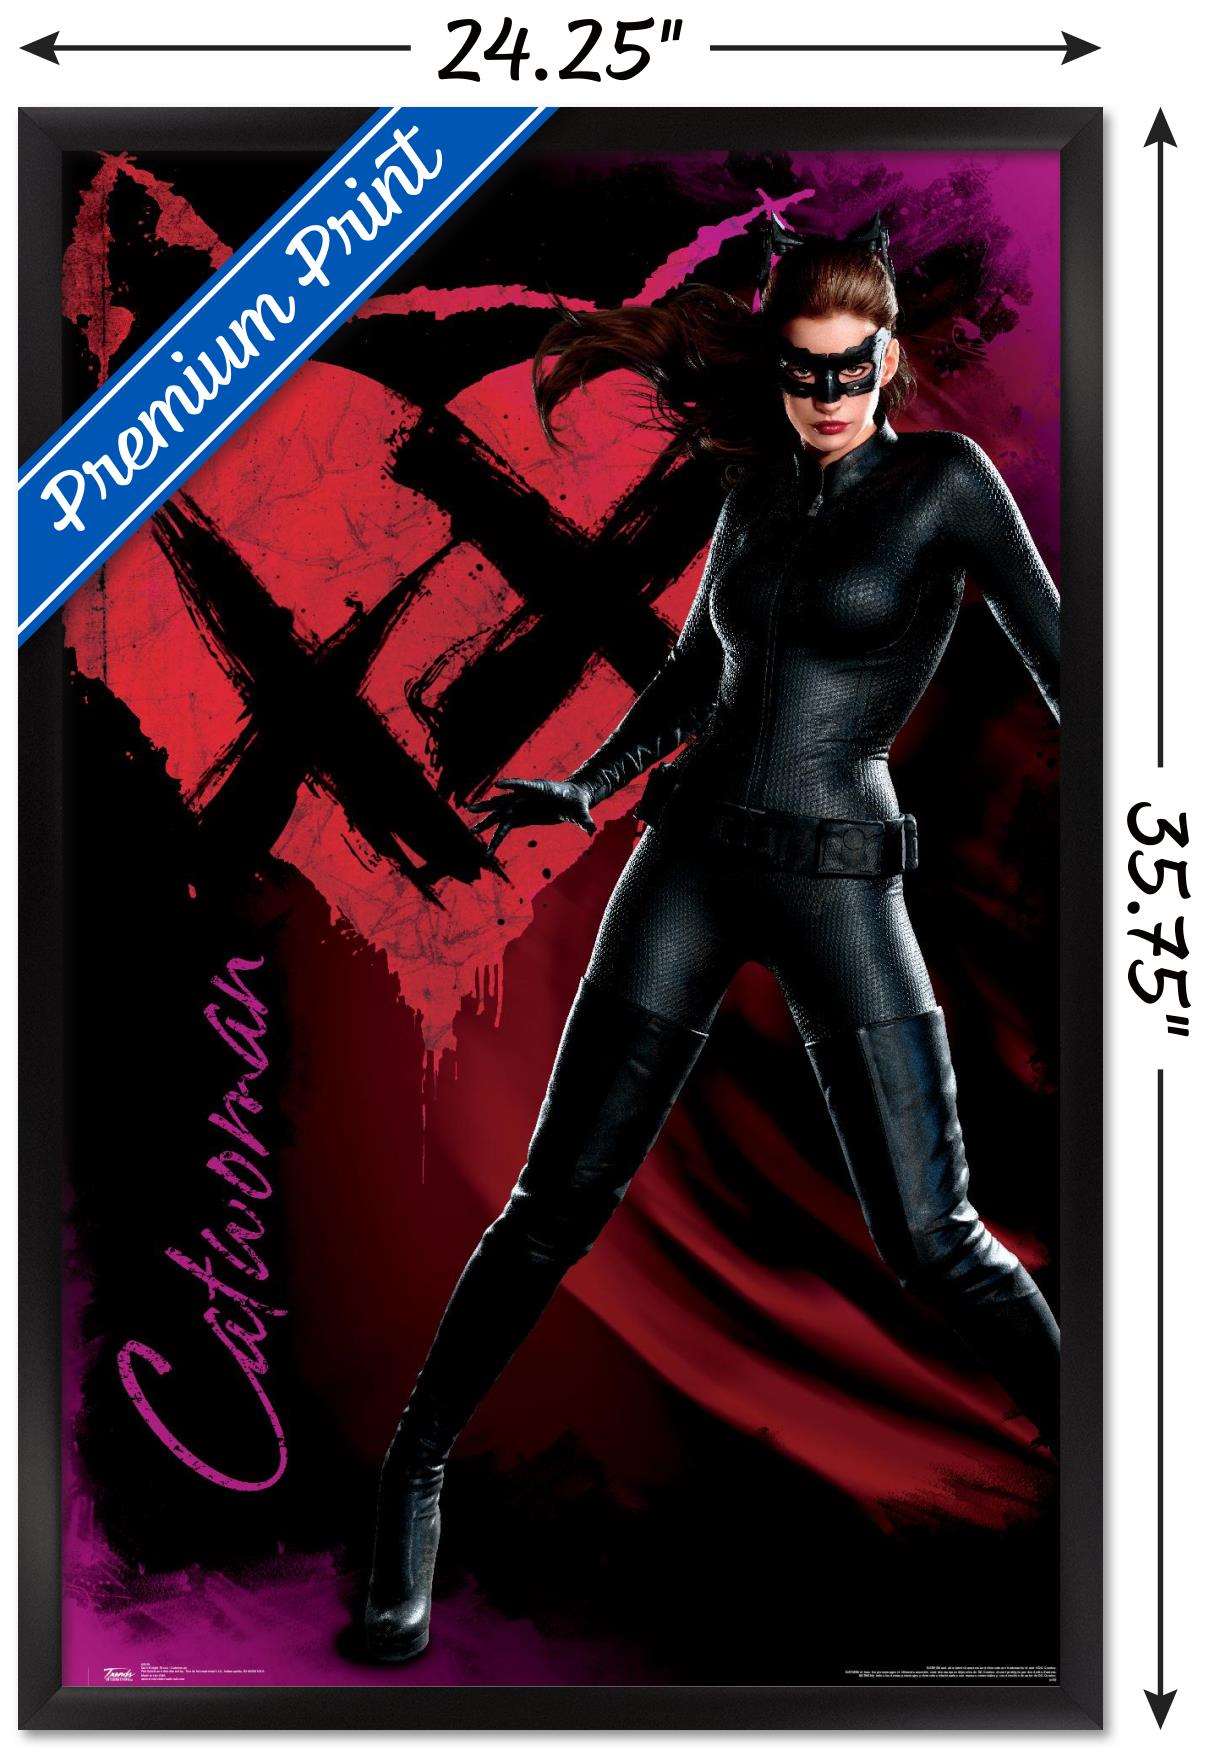 DC Comics Movie - The Dark Knight Rises - Catwoman Poster | eBay